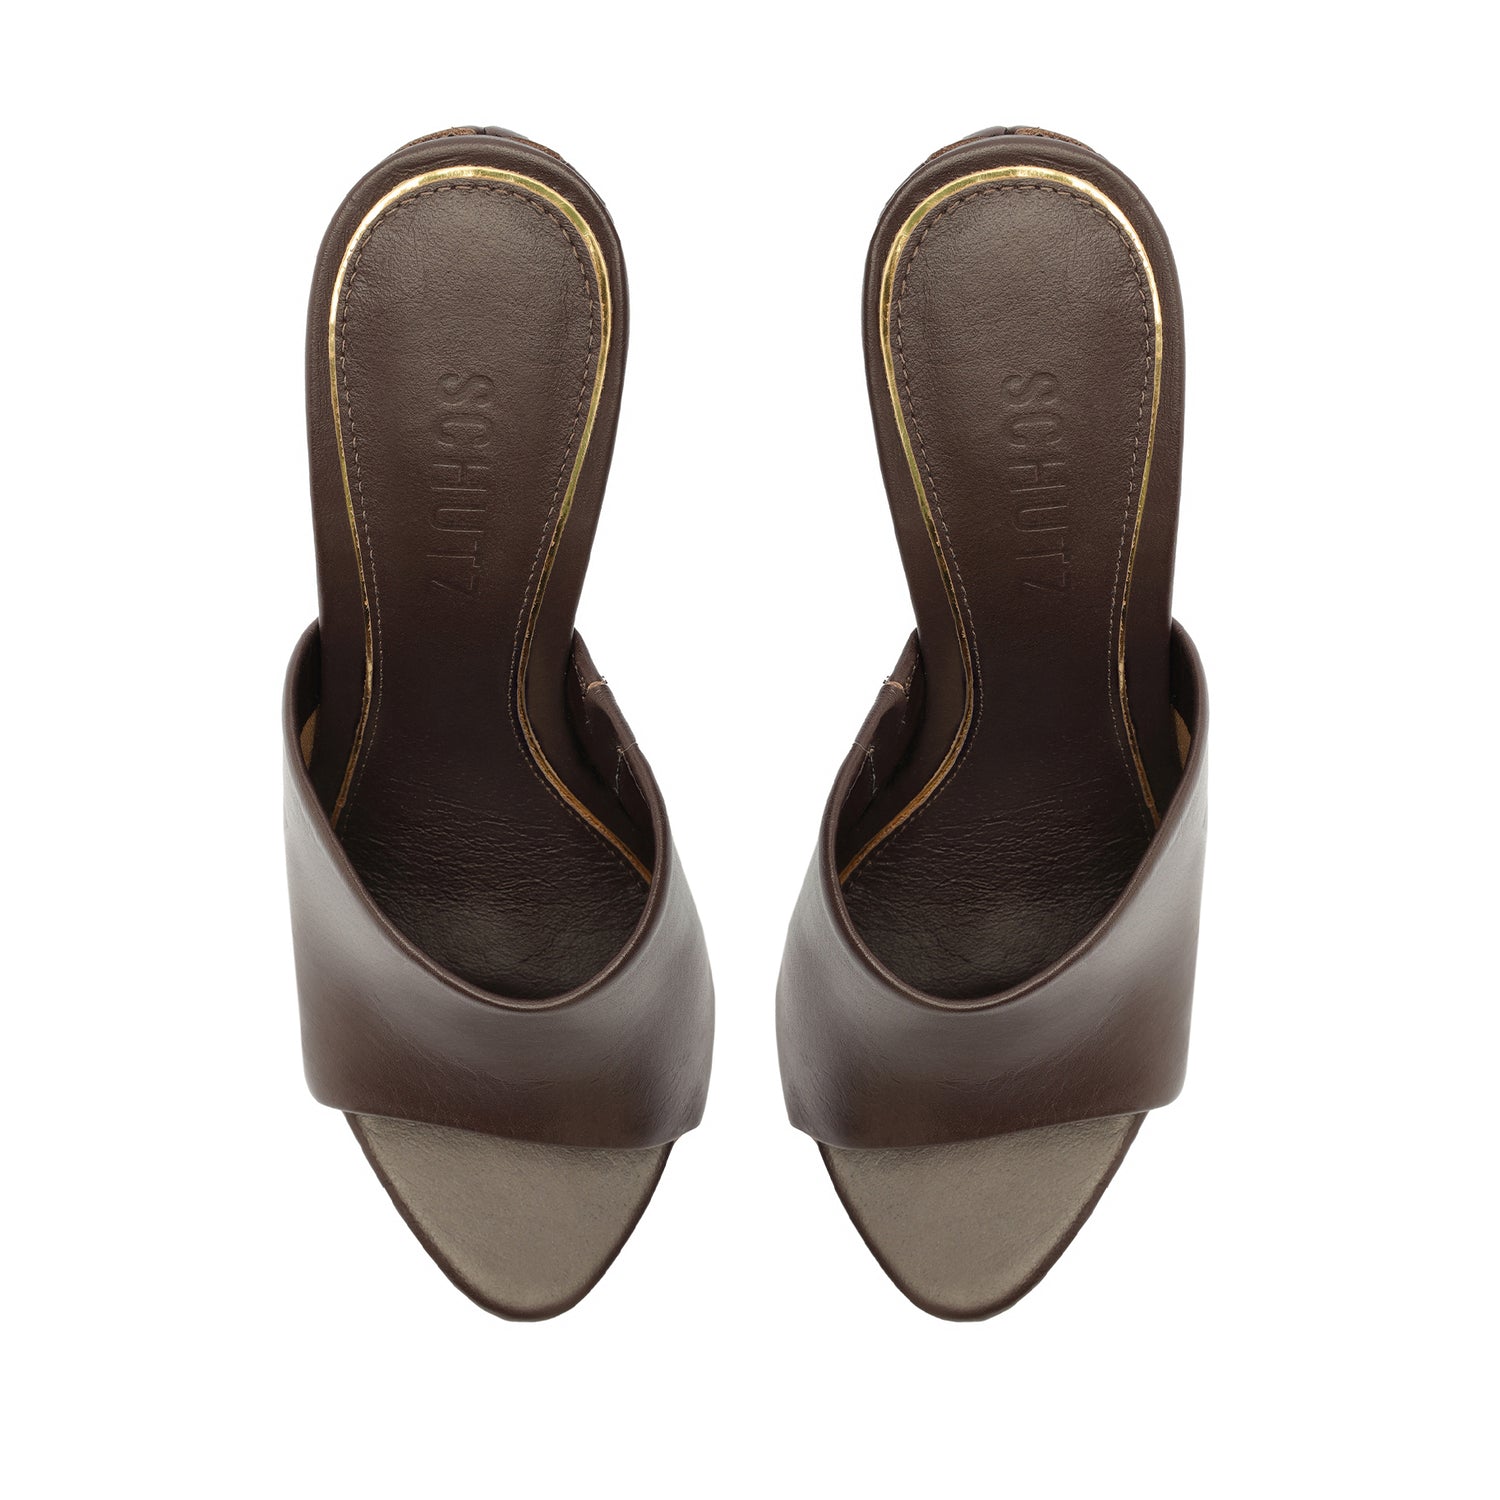 Aprill Woven Leather Sandal Sandals Resort 24    - Schutz Shoes